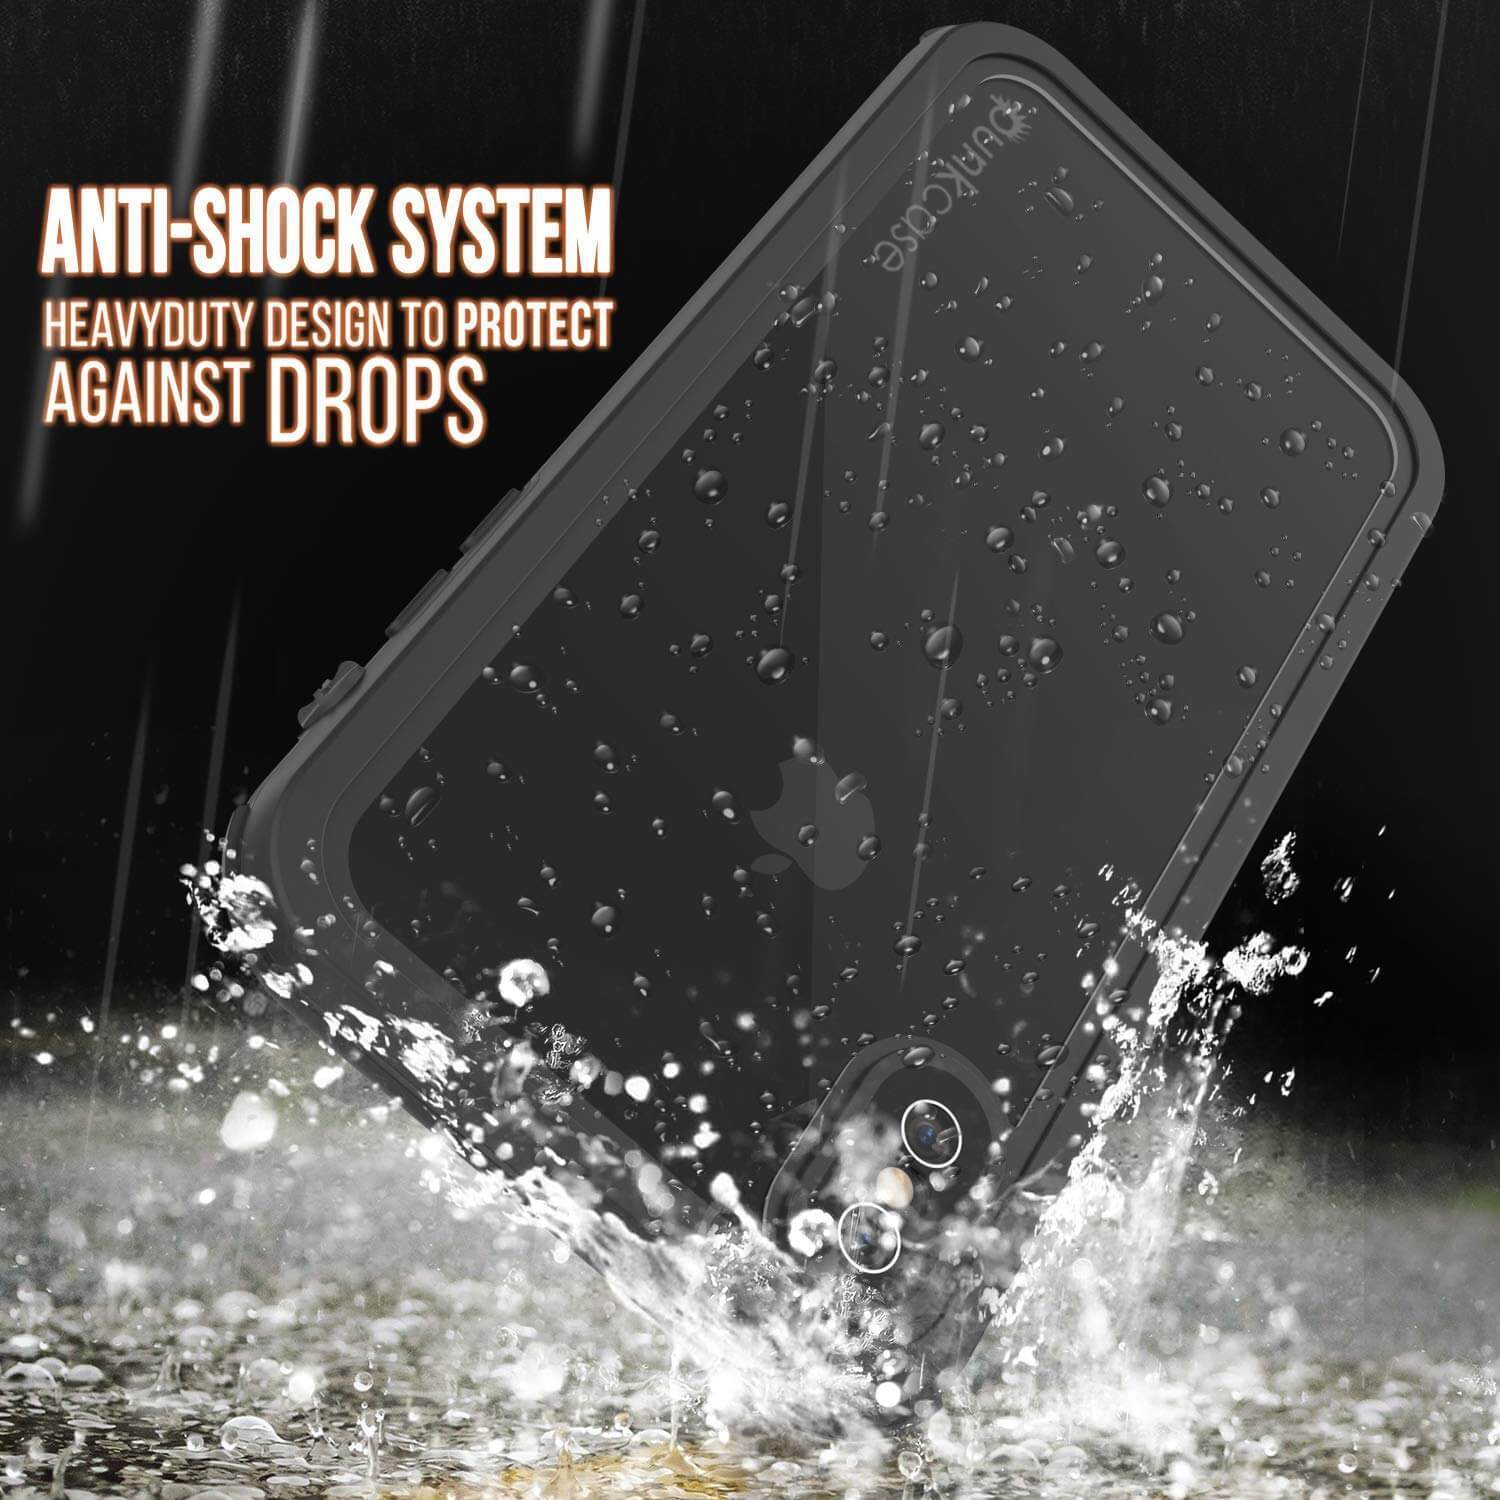 iPhone XS Max Waterproof IP68 Case, Punkcase [teal] [Rapture Series]  W/Built in Screen Protector